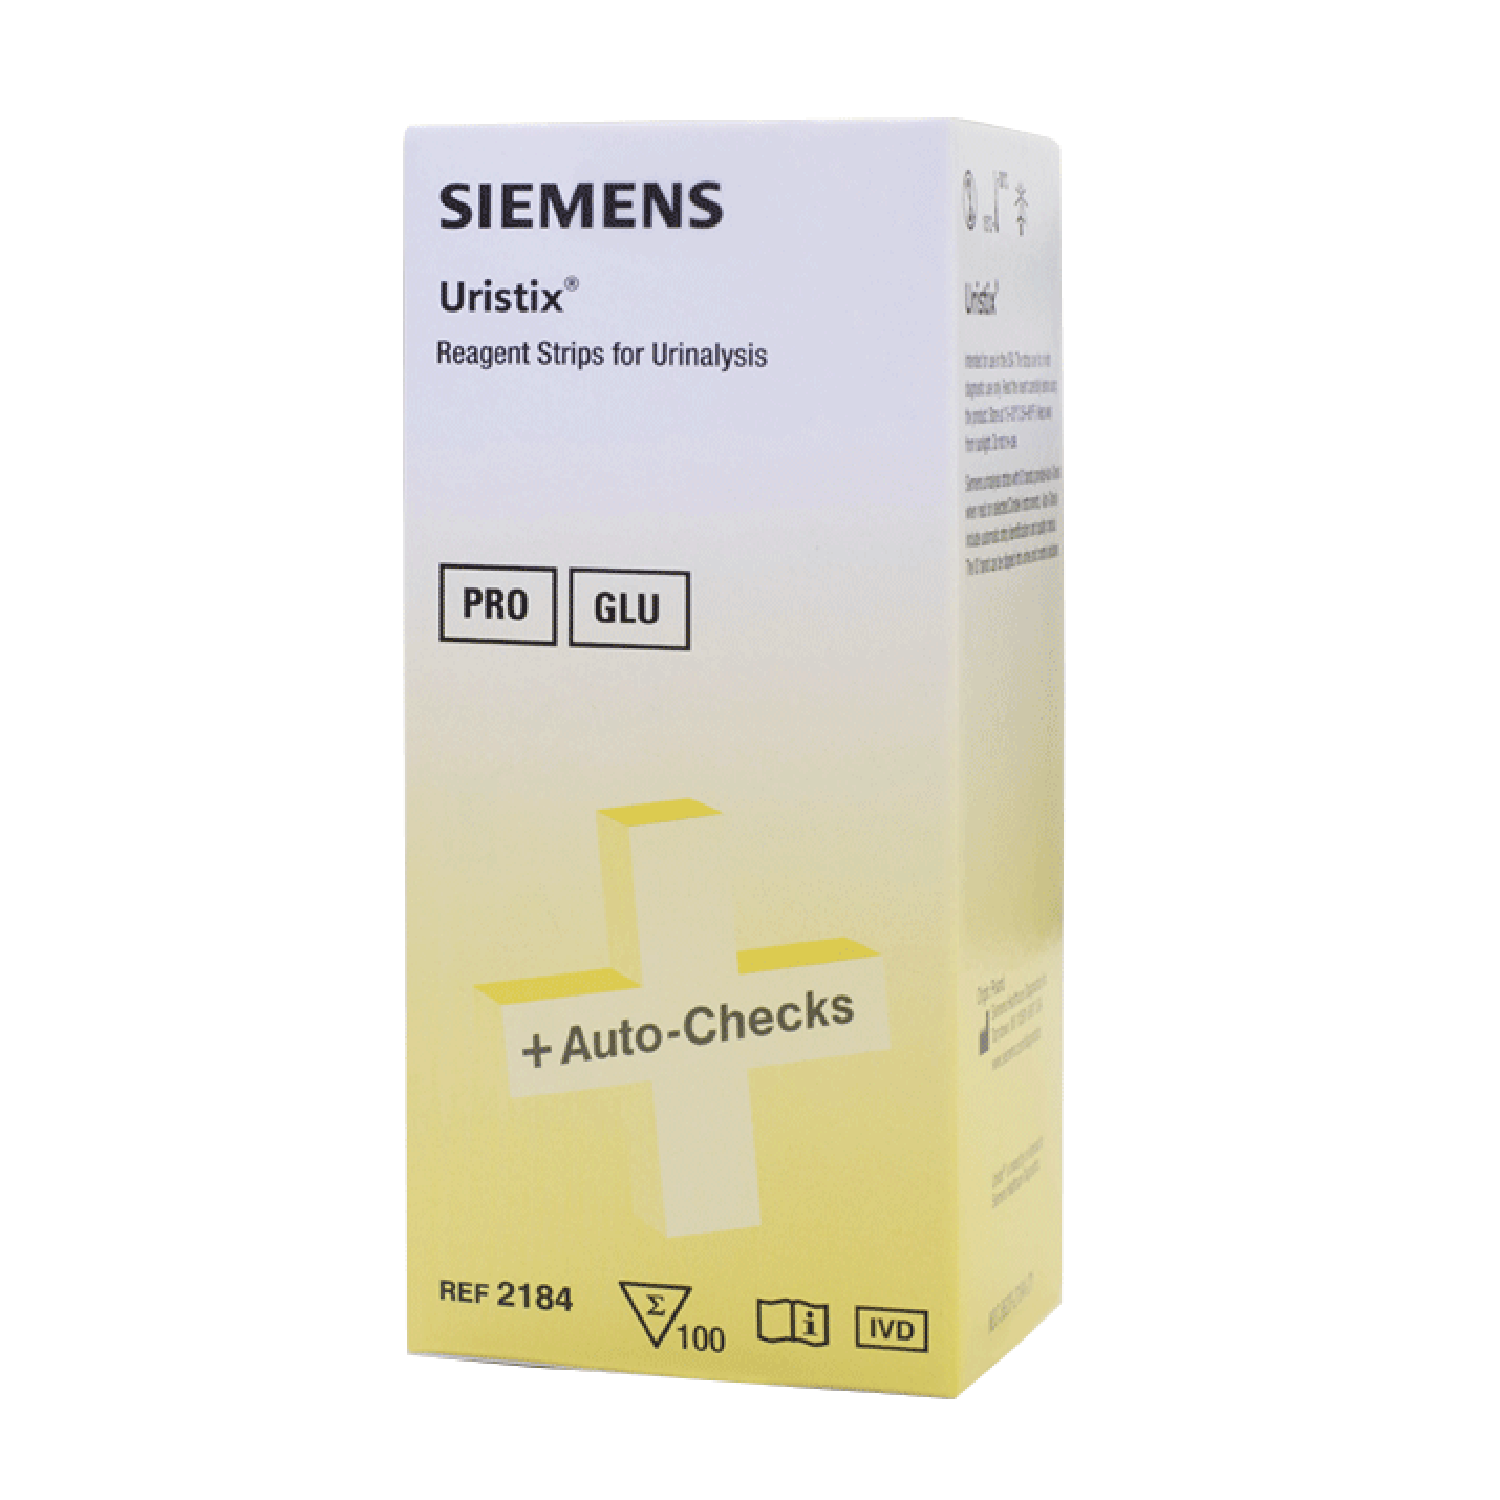 Siemens Uristix Reagent Strips for Urinalysis | Pack of 50